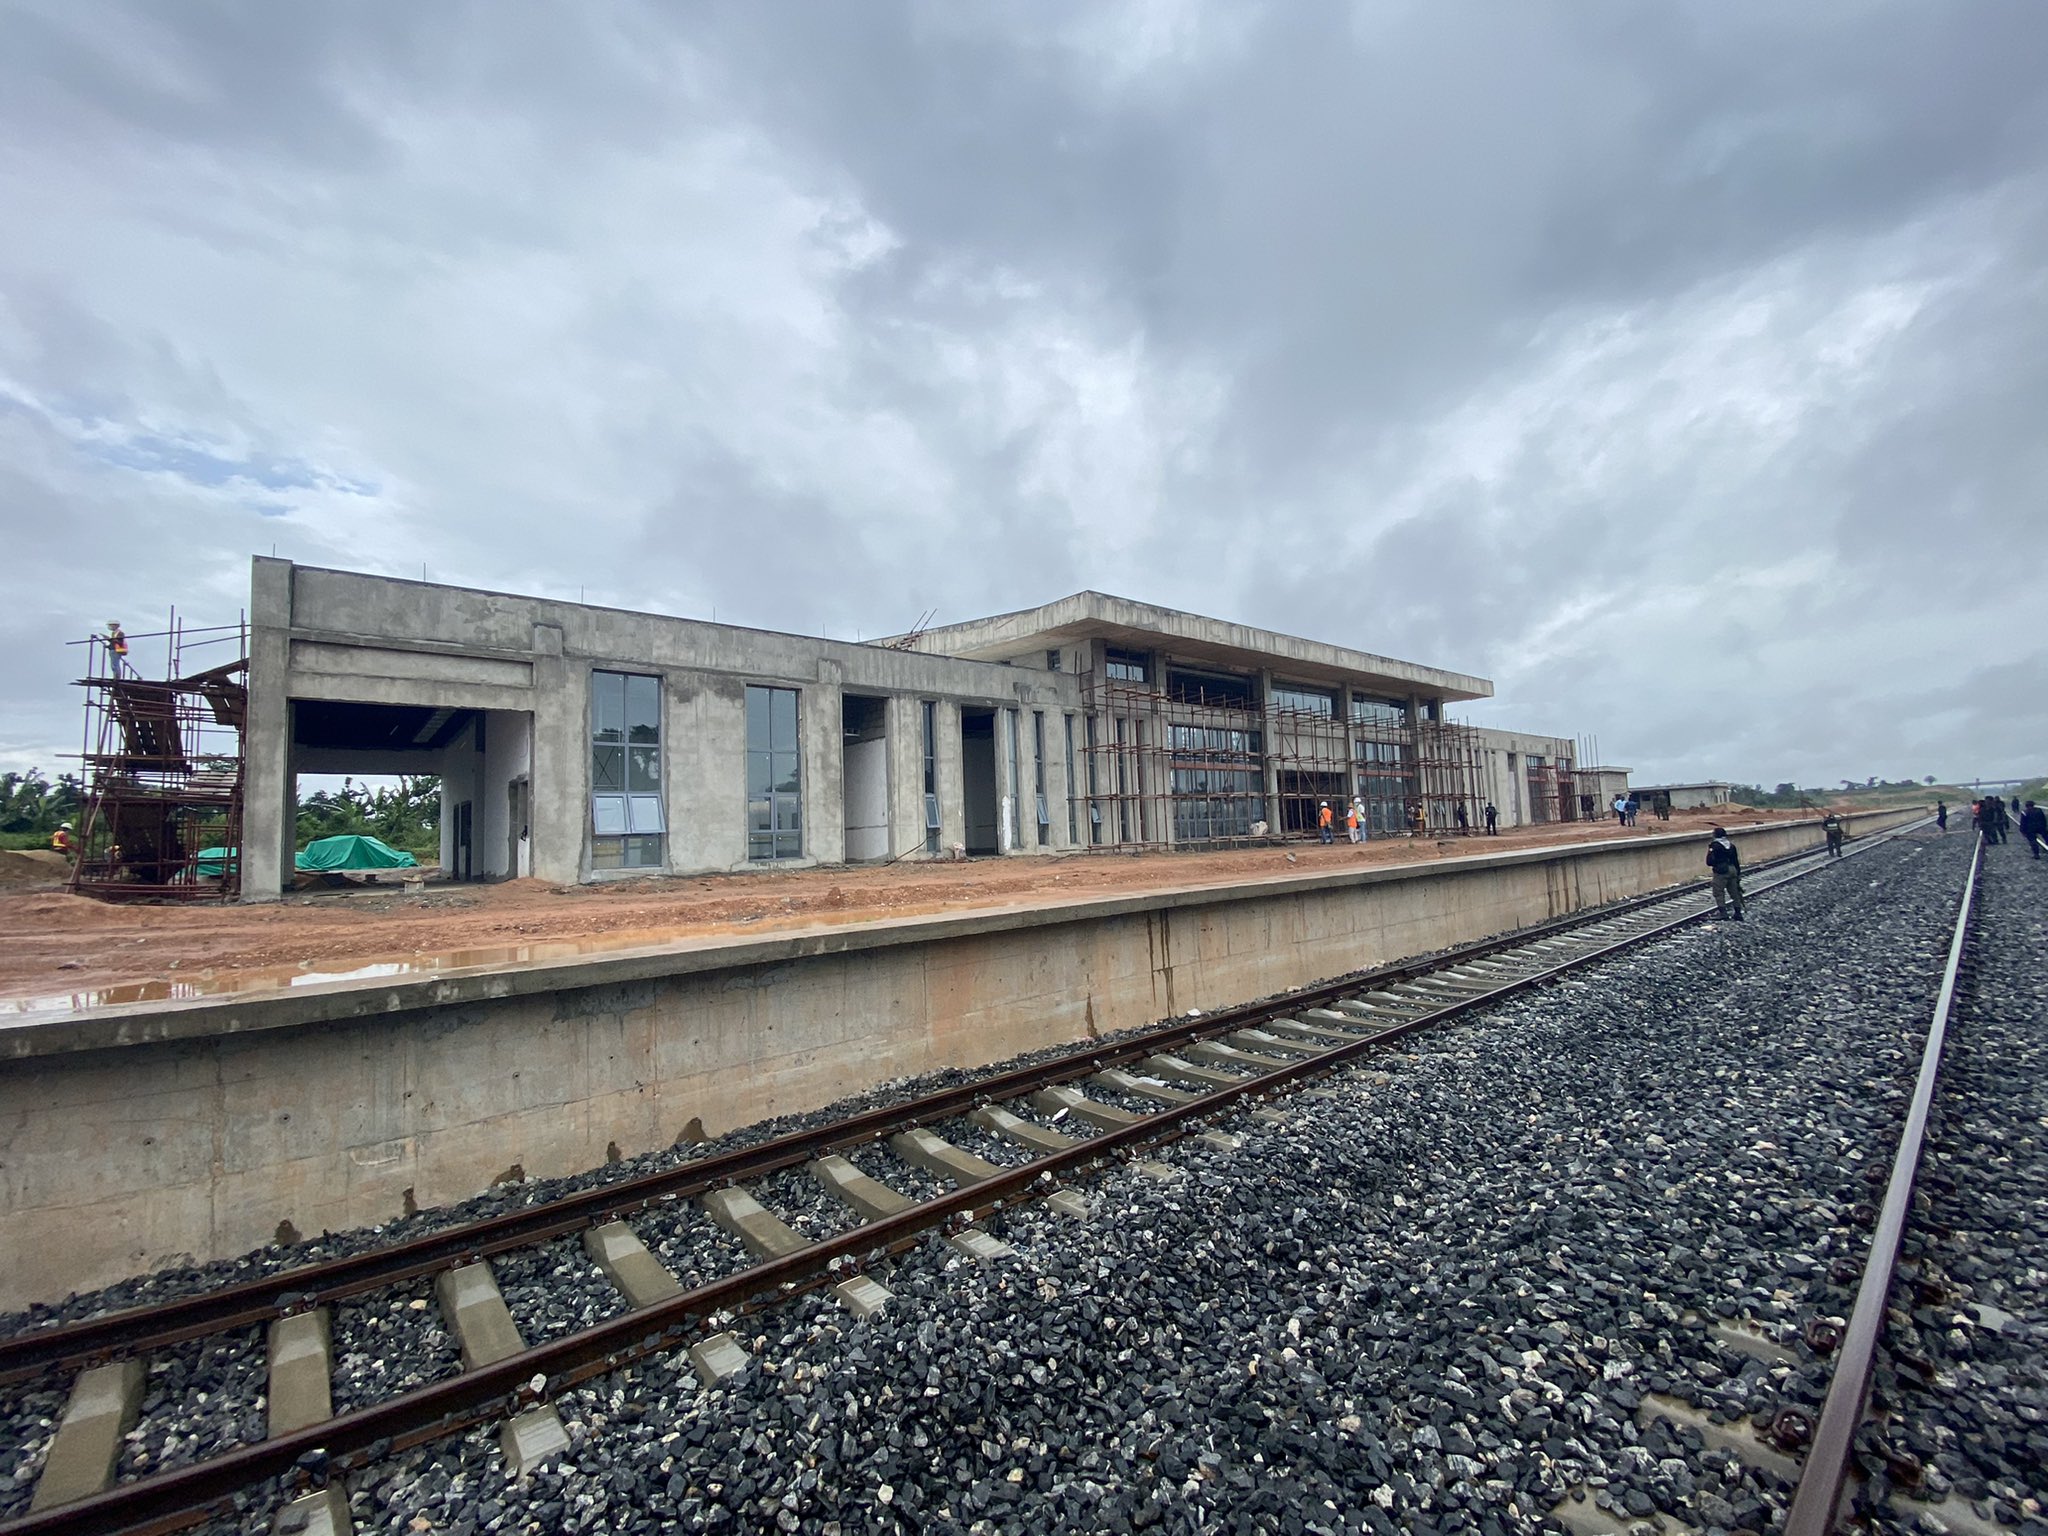 Ladoke Akintola station in Omio-Adio, Oyo State